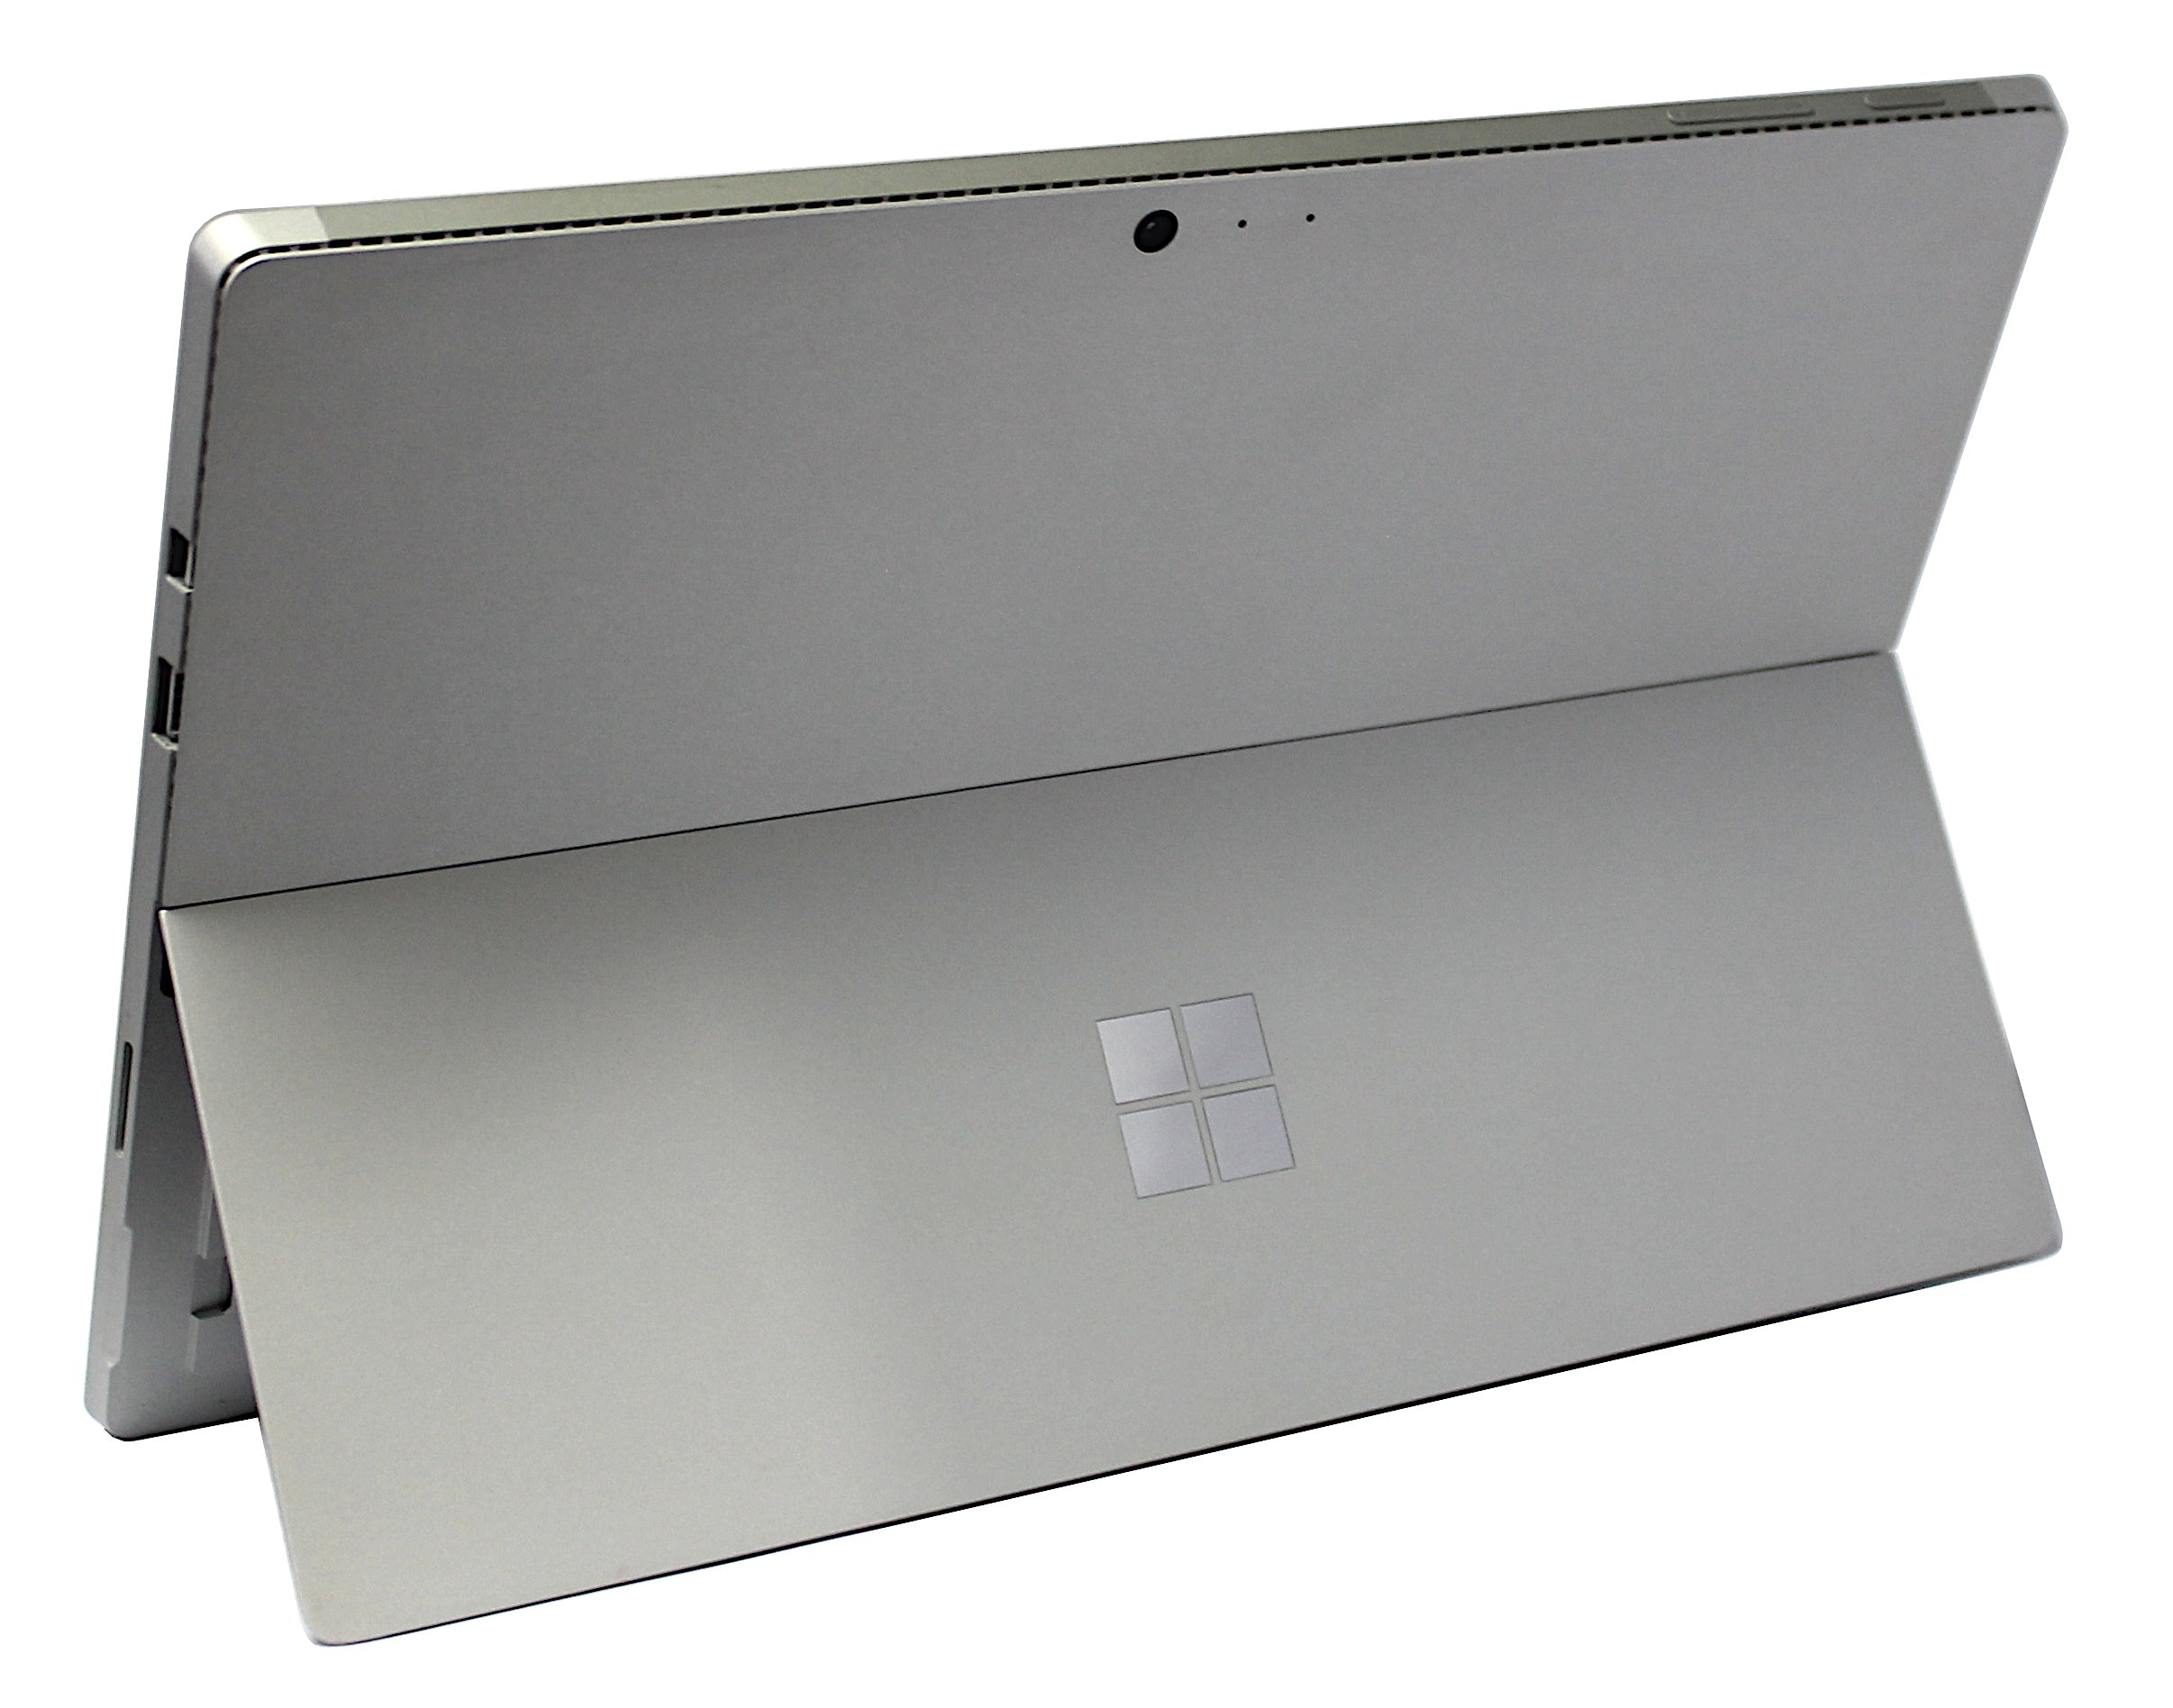 Microsoft Surface Pro 4 Tablet, Intel Core i7, 16GB RAM, 256GB SSD, Windows 10